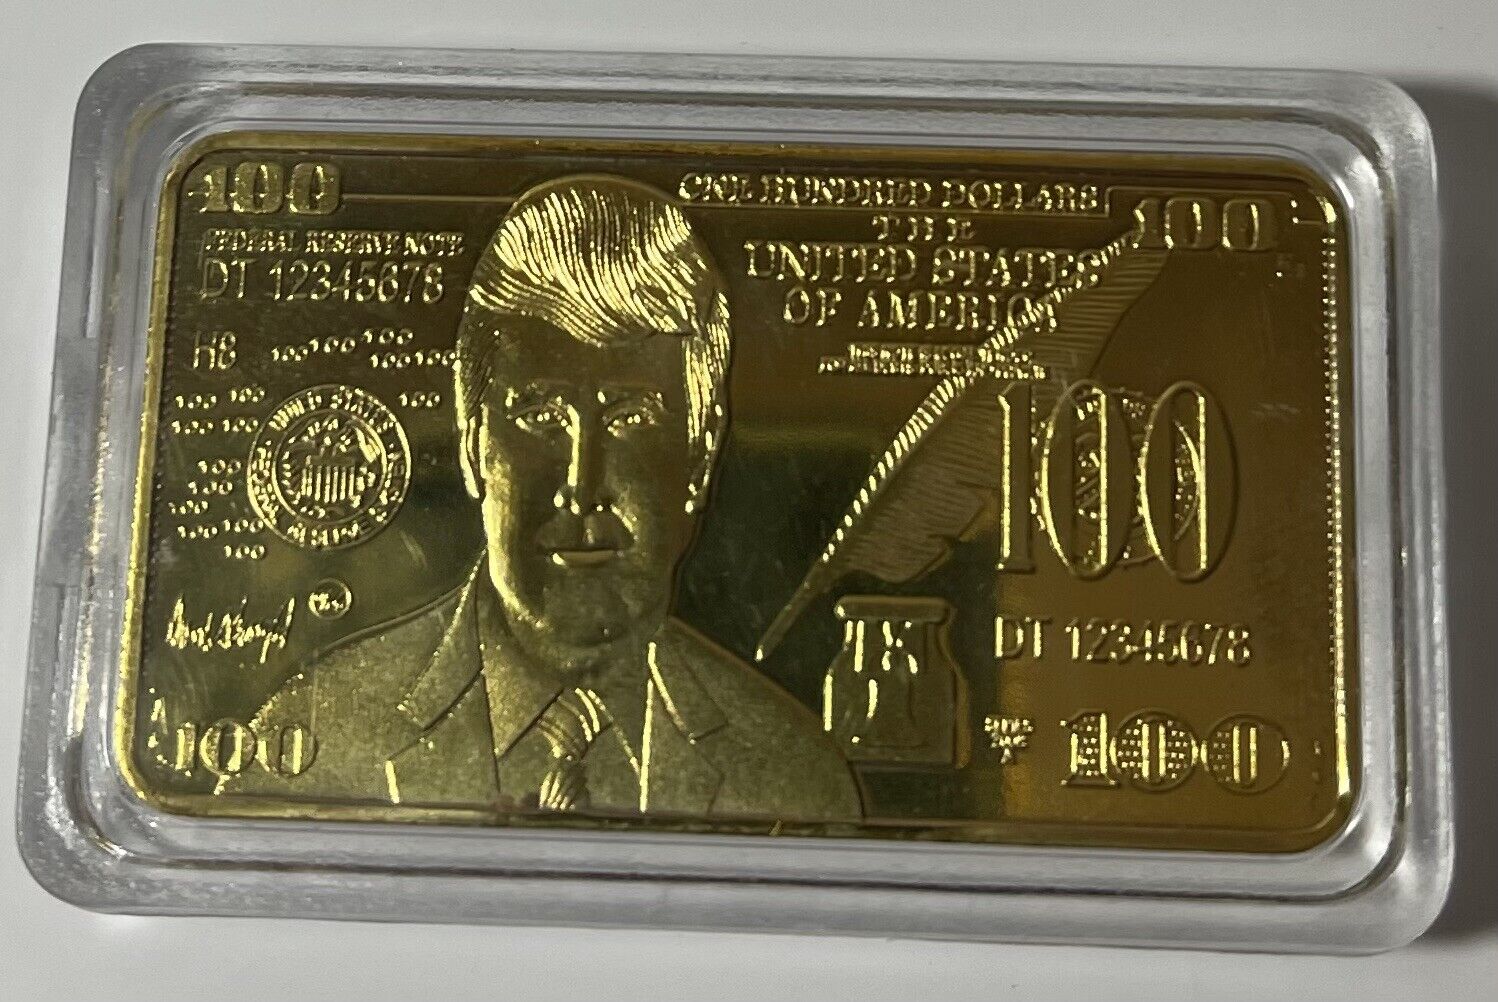 Trump 24K Gold Plated $100 Bar / Collectible Bar